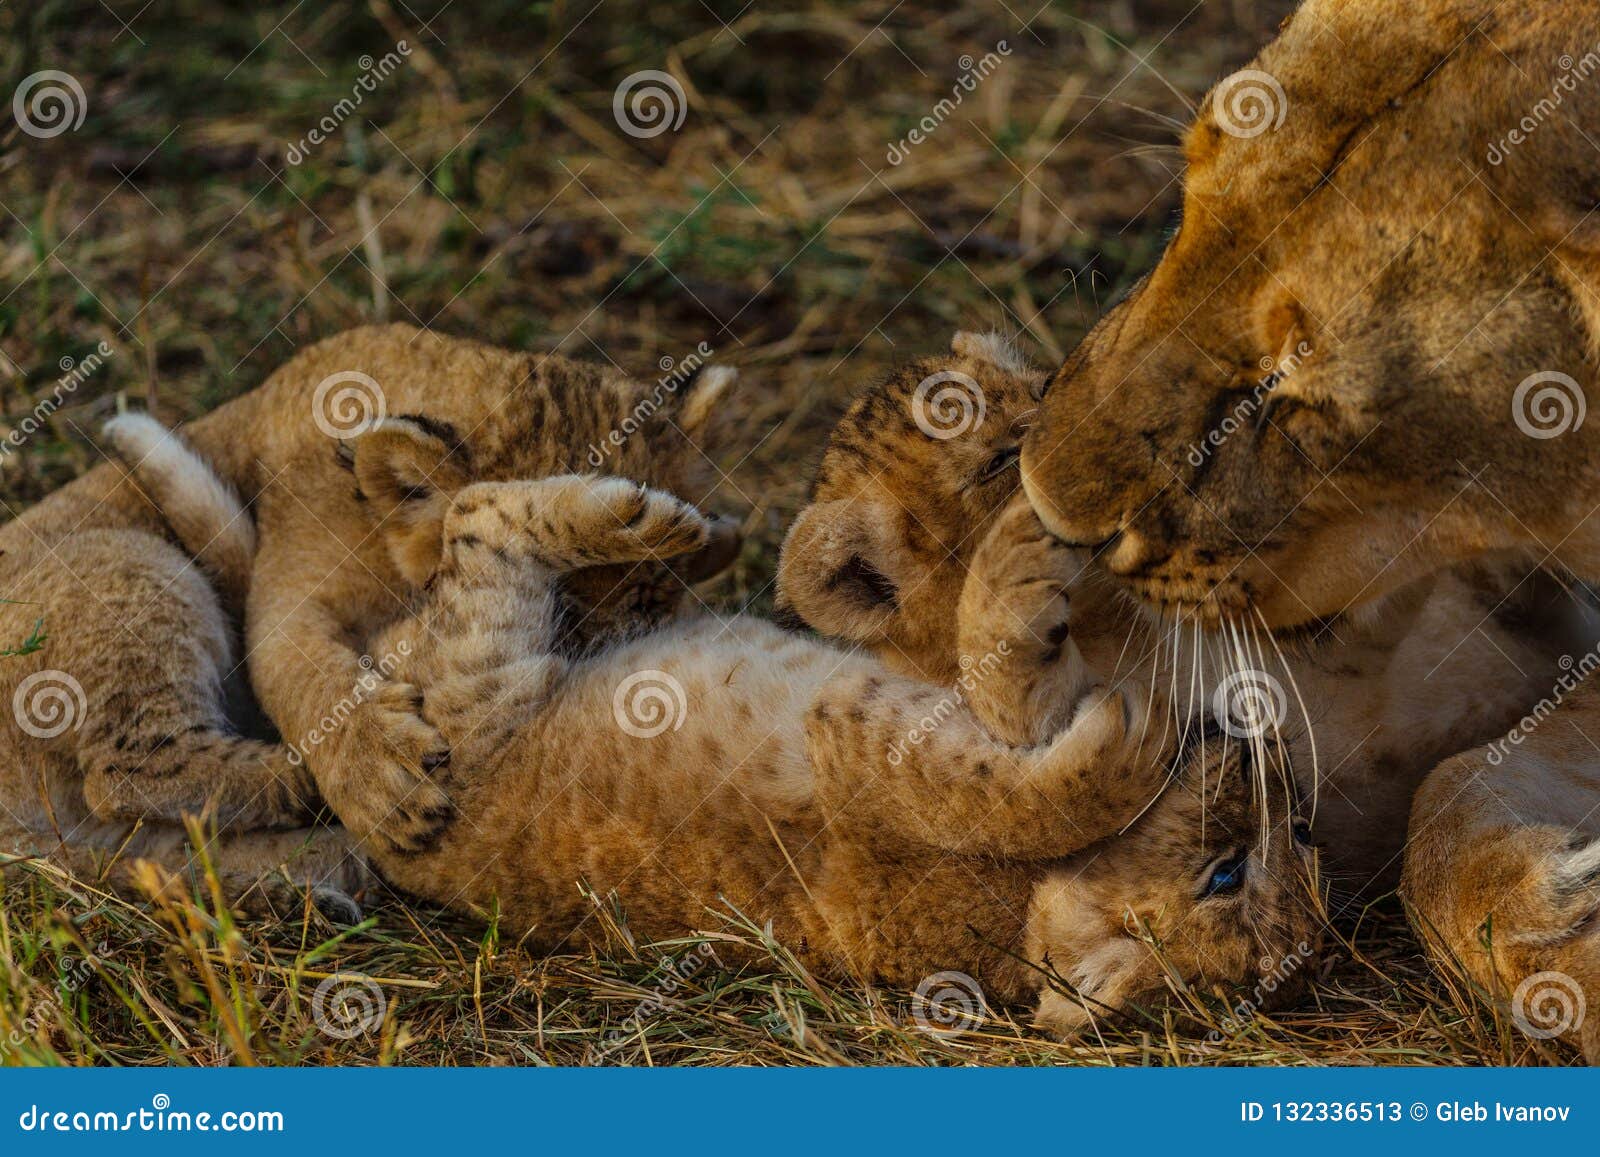 Baby of lion in savannah stock image. Image of bush ...